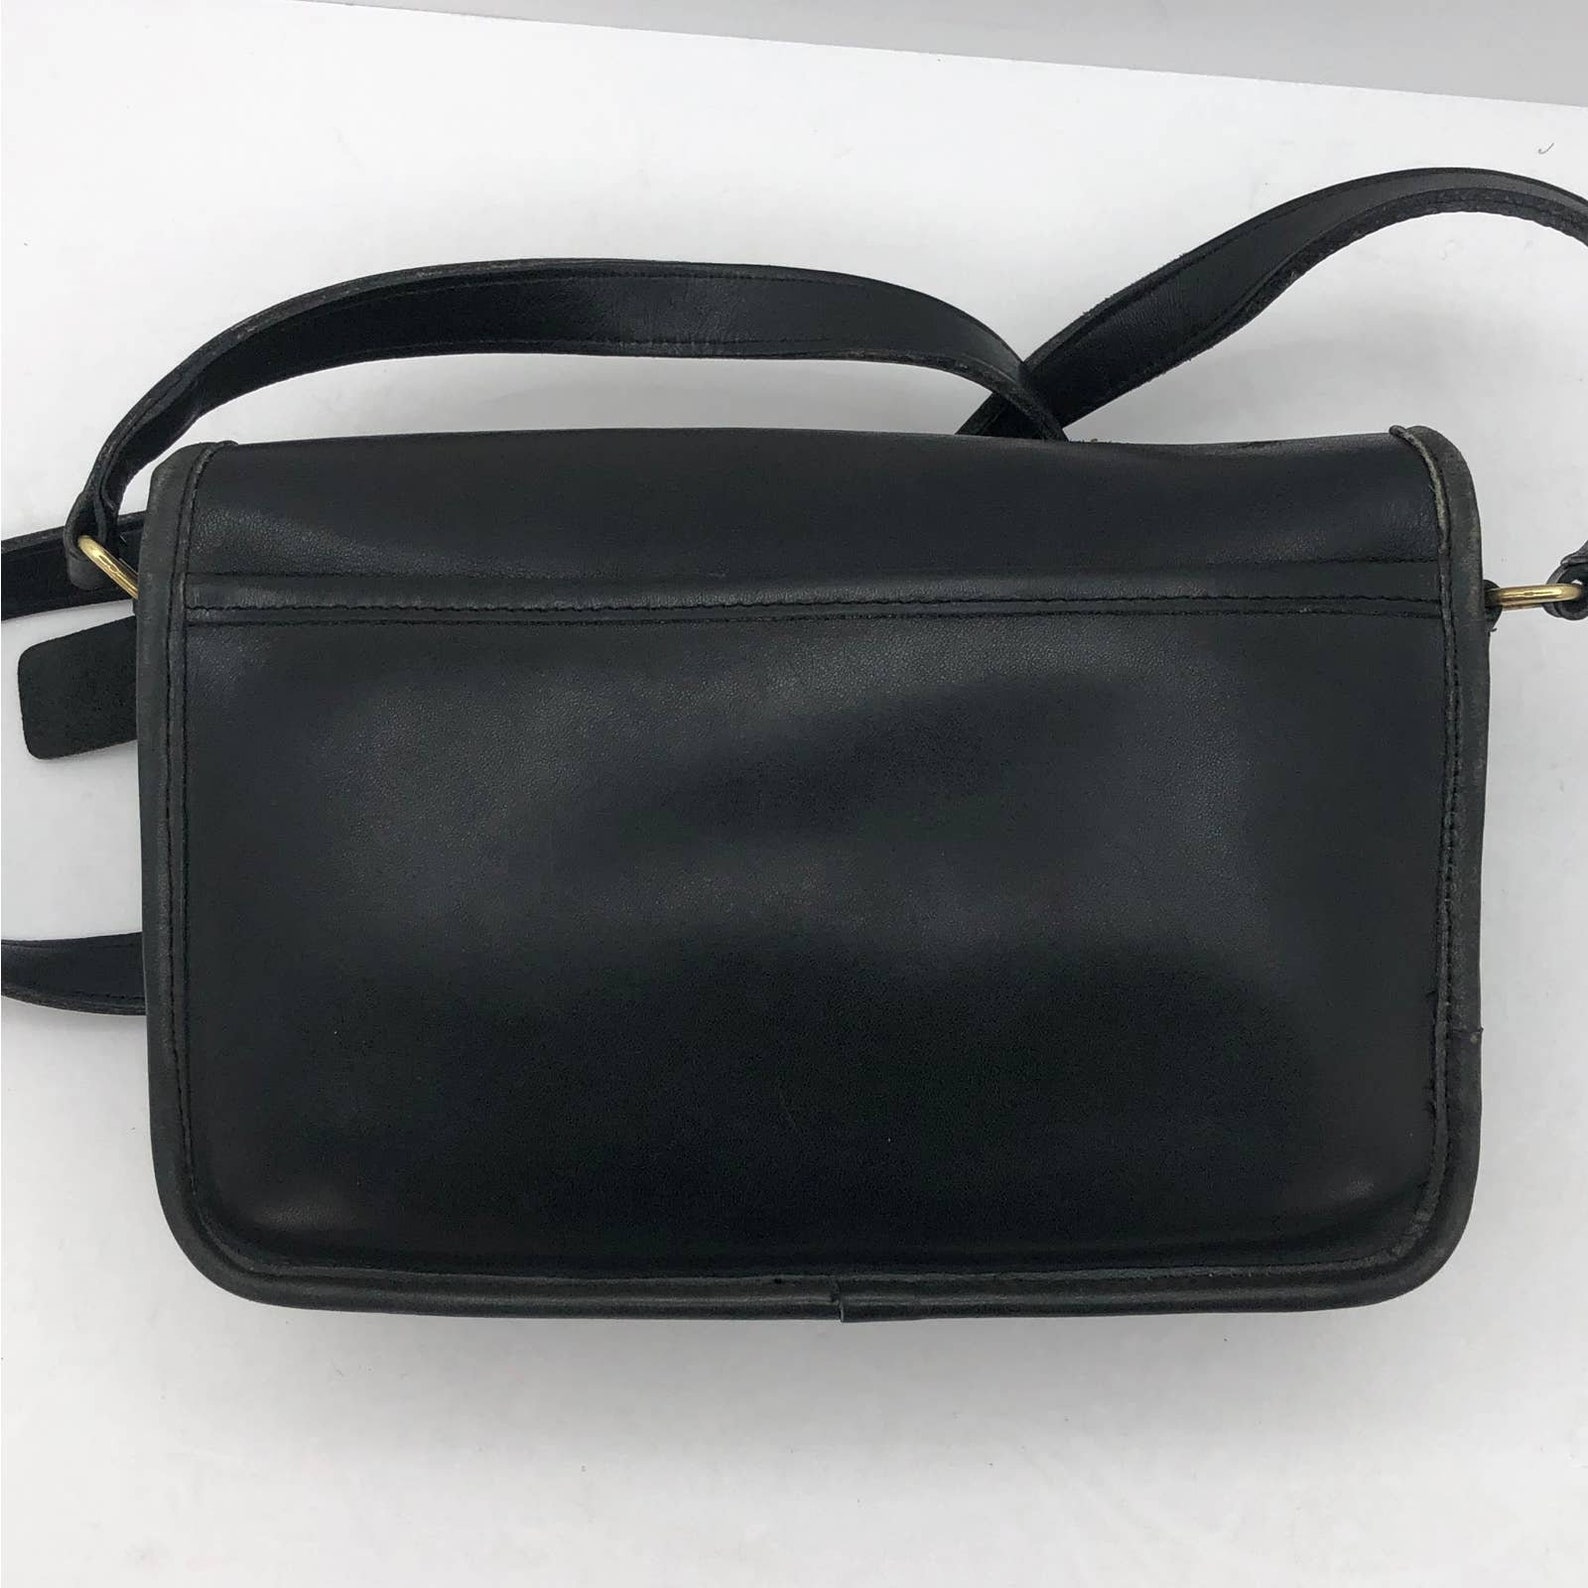 Rare Vintage Coach Compartment Bag 9850 Black Leather | Etsy